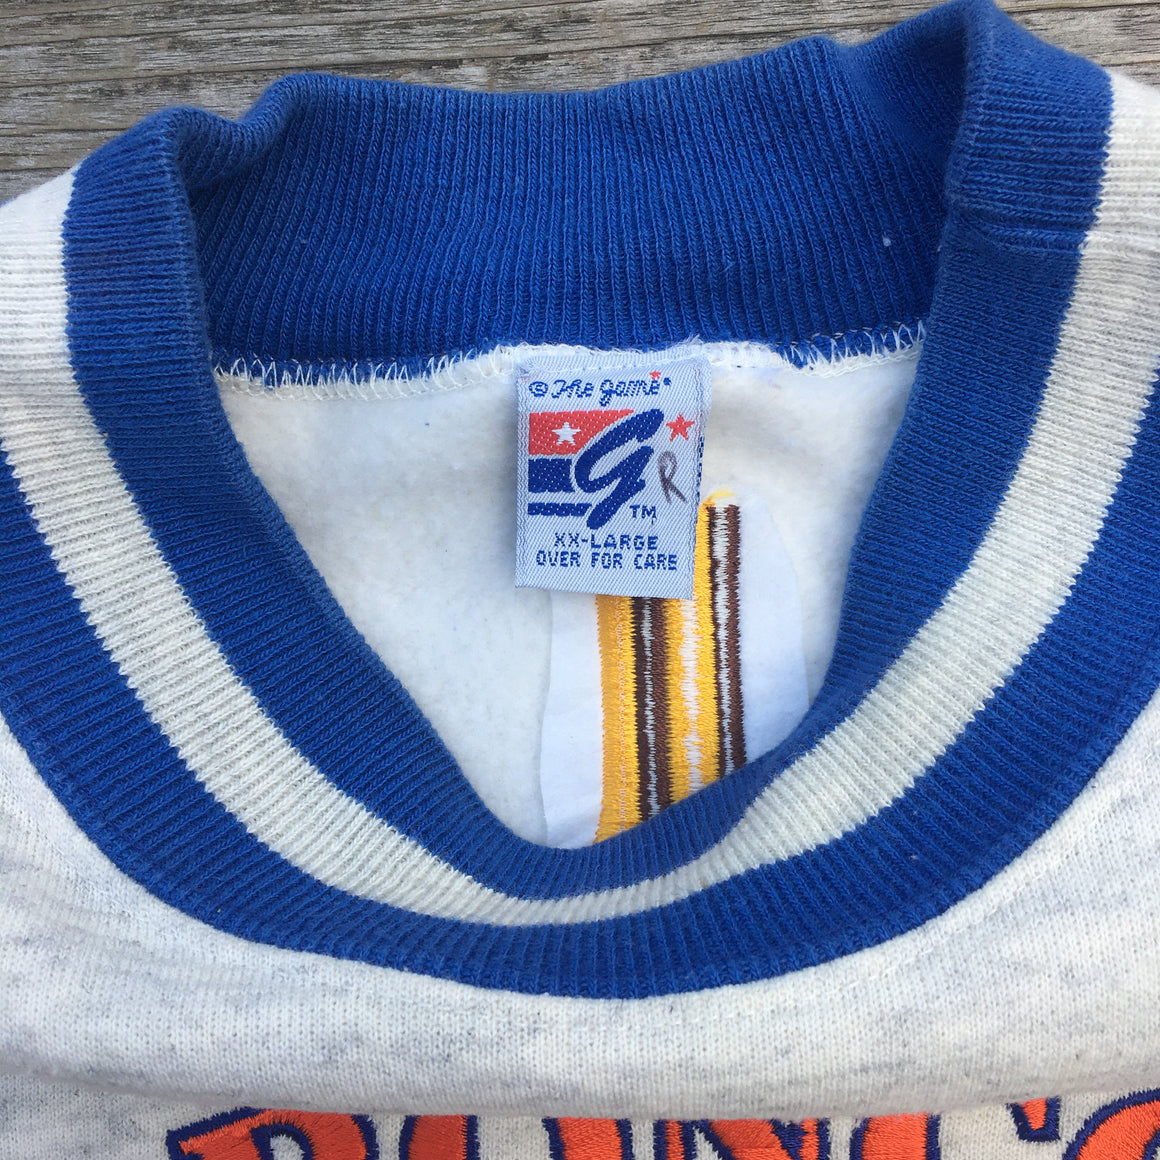 522 of 1200 Denver Broncos sweatshirt - XL / 2XL